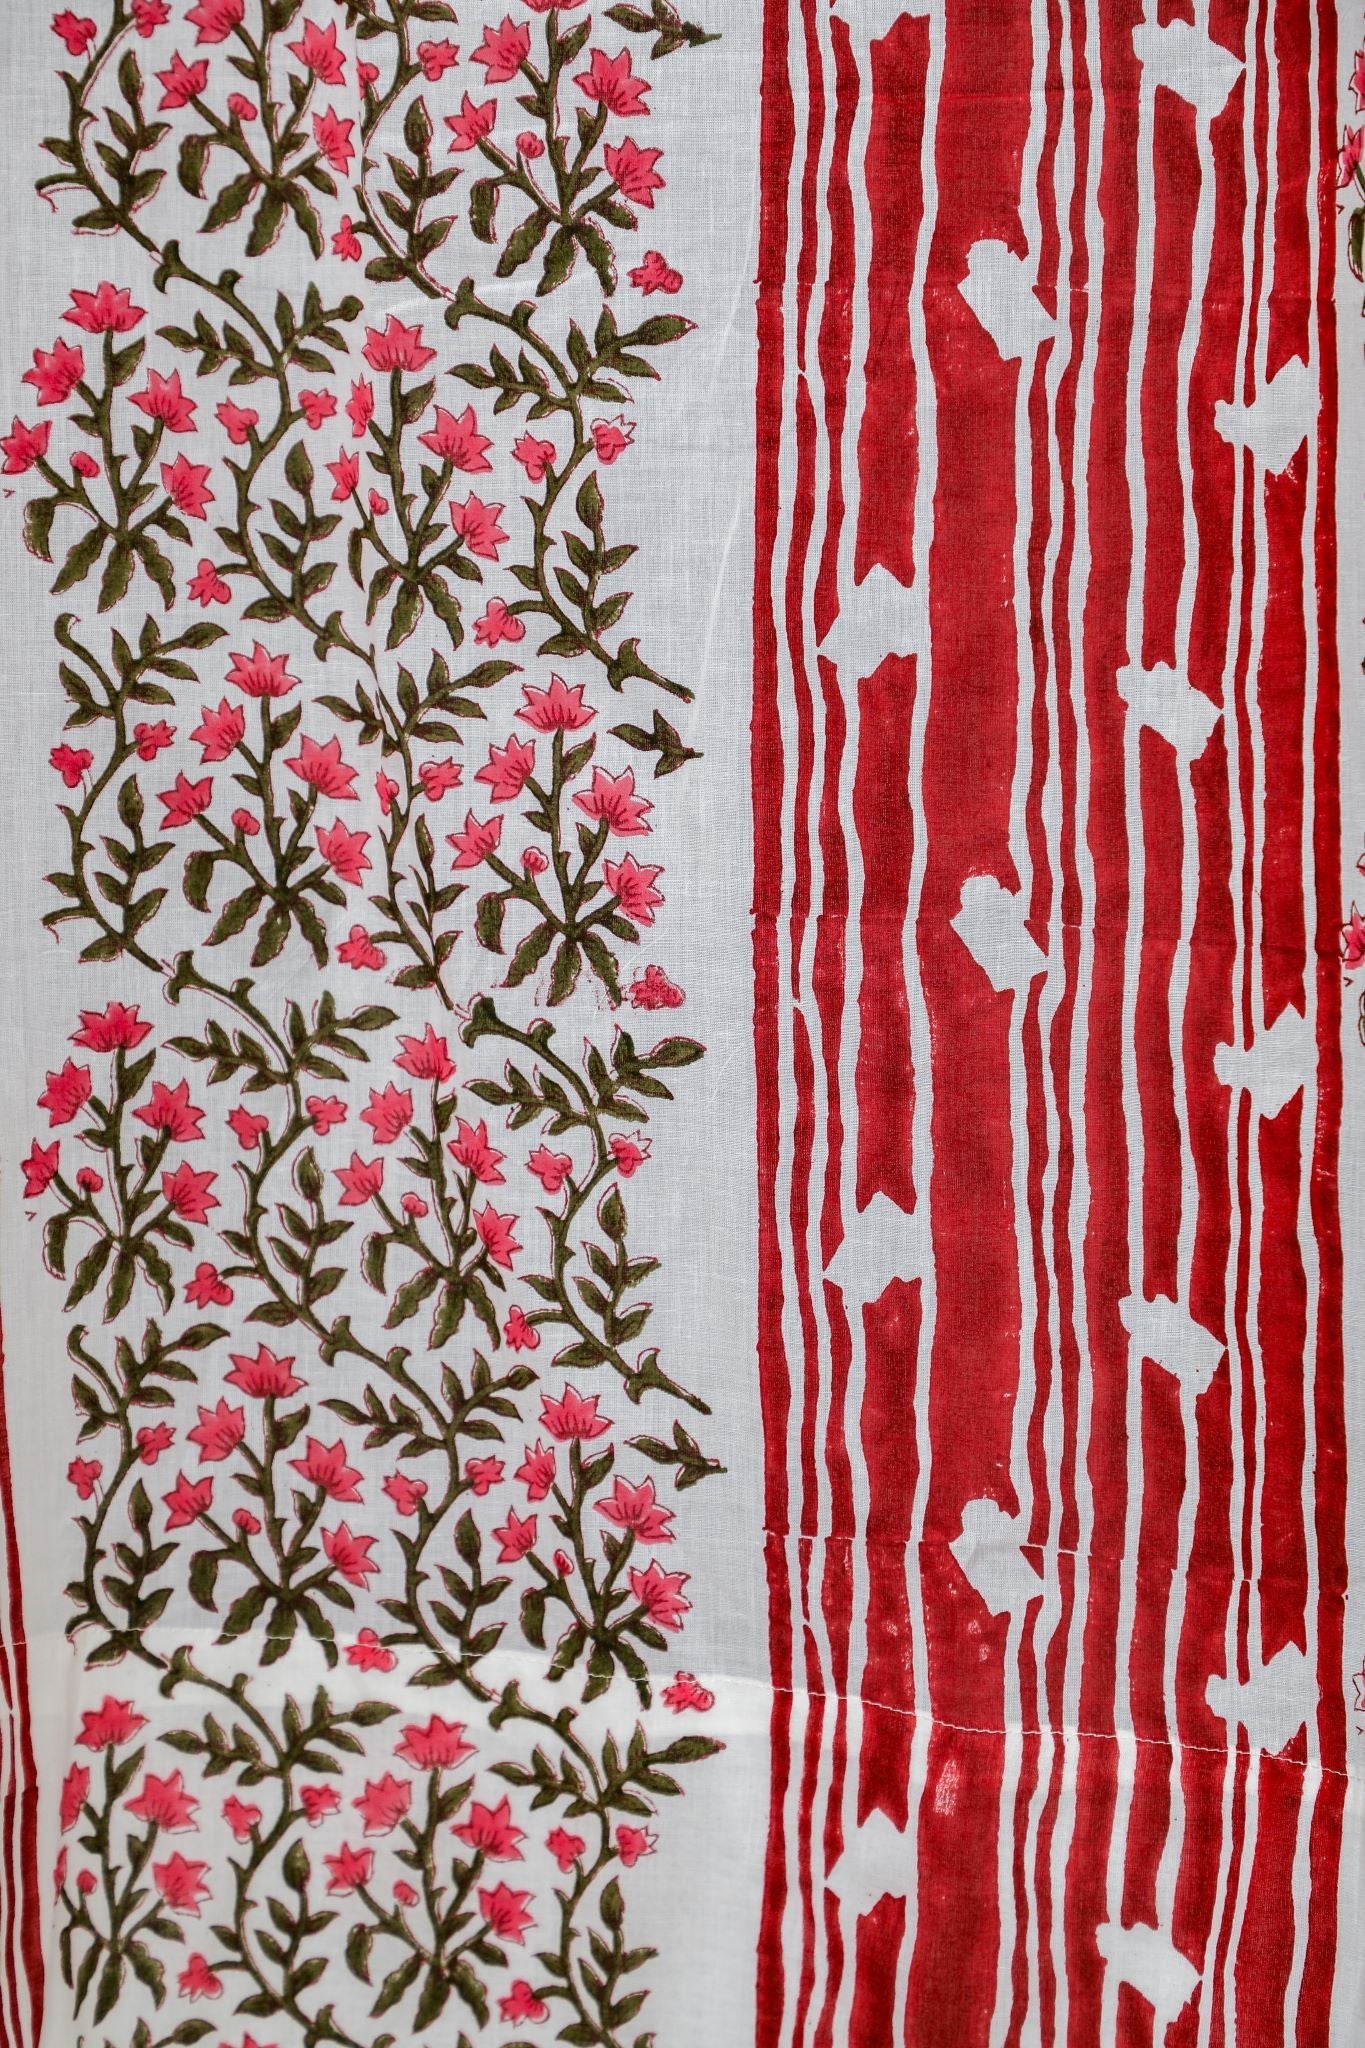 SootiSyahi 'Haven Glazing' Handblock Printed Cotton Door Curtain - SootiSyahi